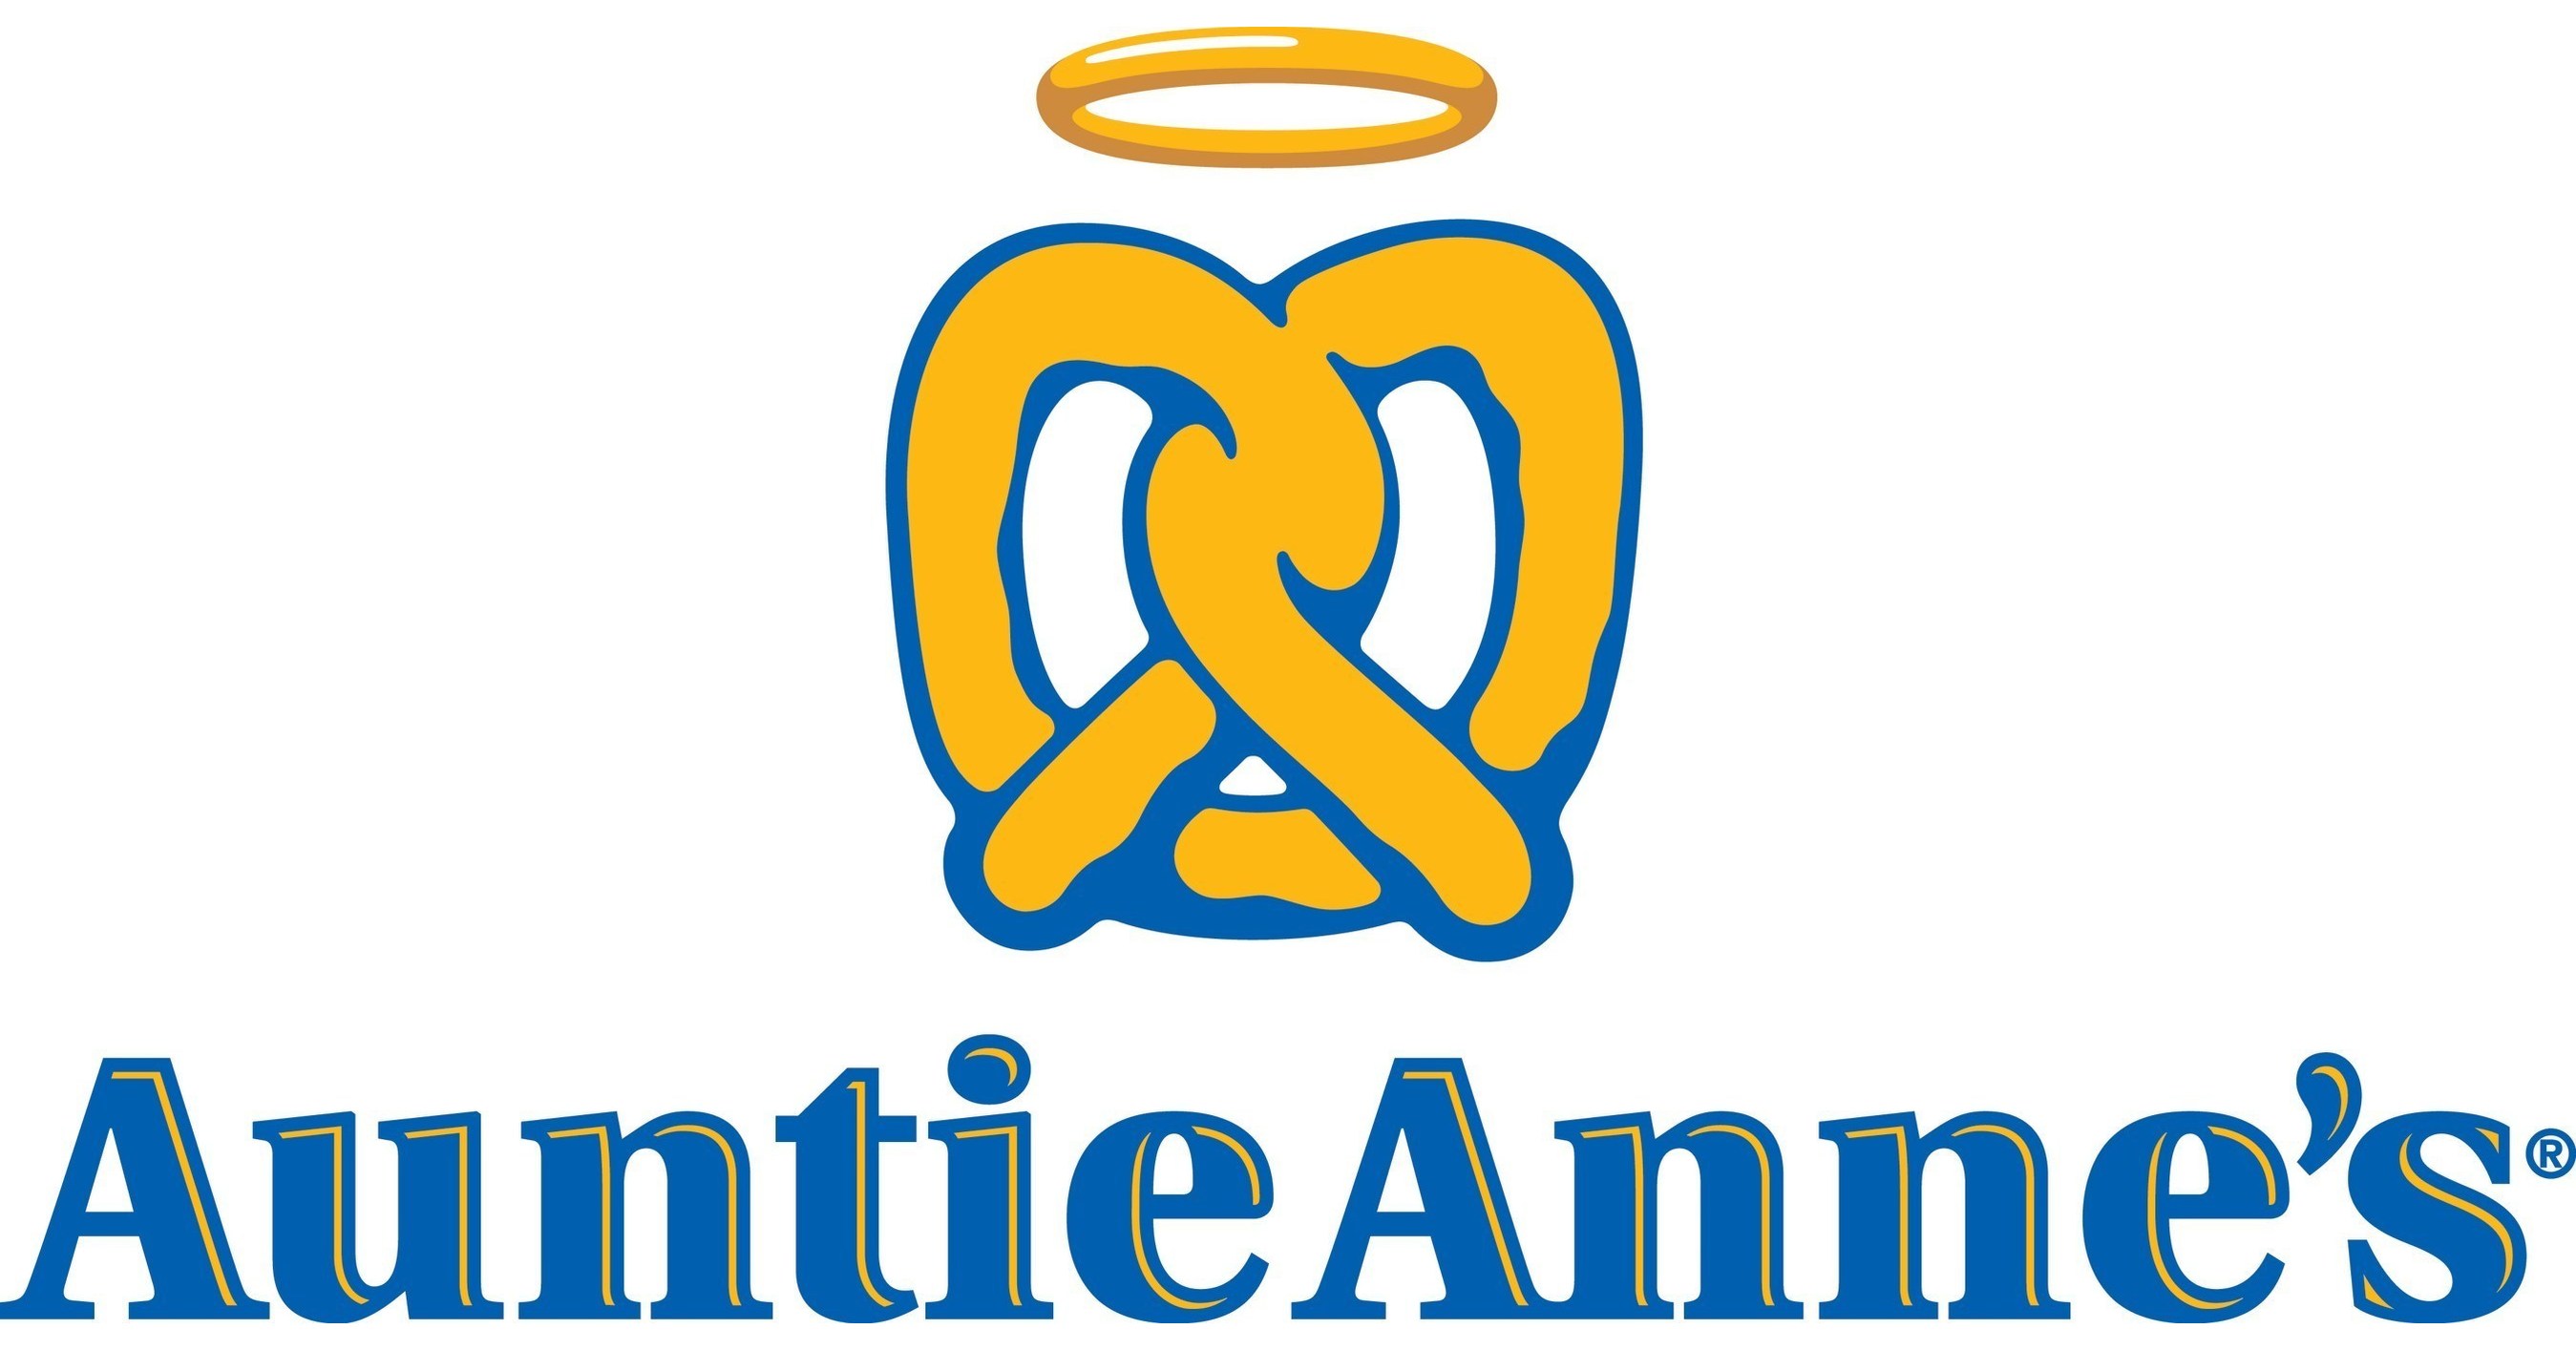 Auntie Anne's Celebrates National Pretzel Day with Free Pretzels, Fun